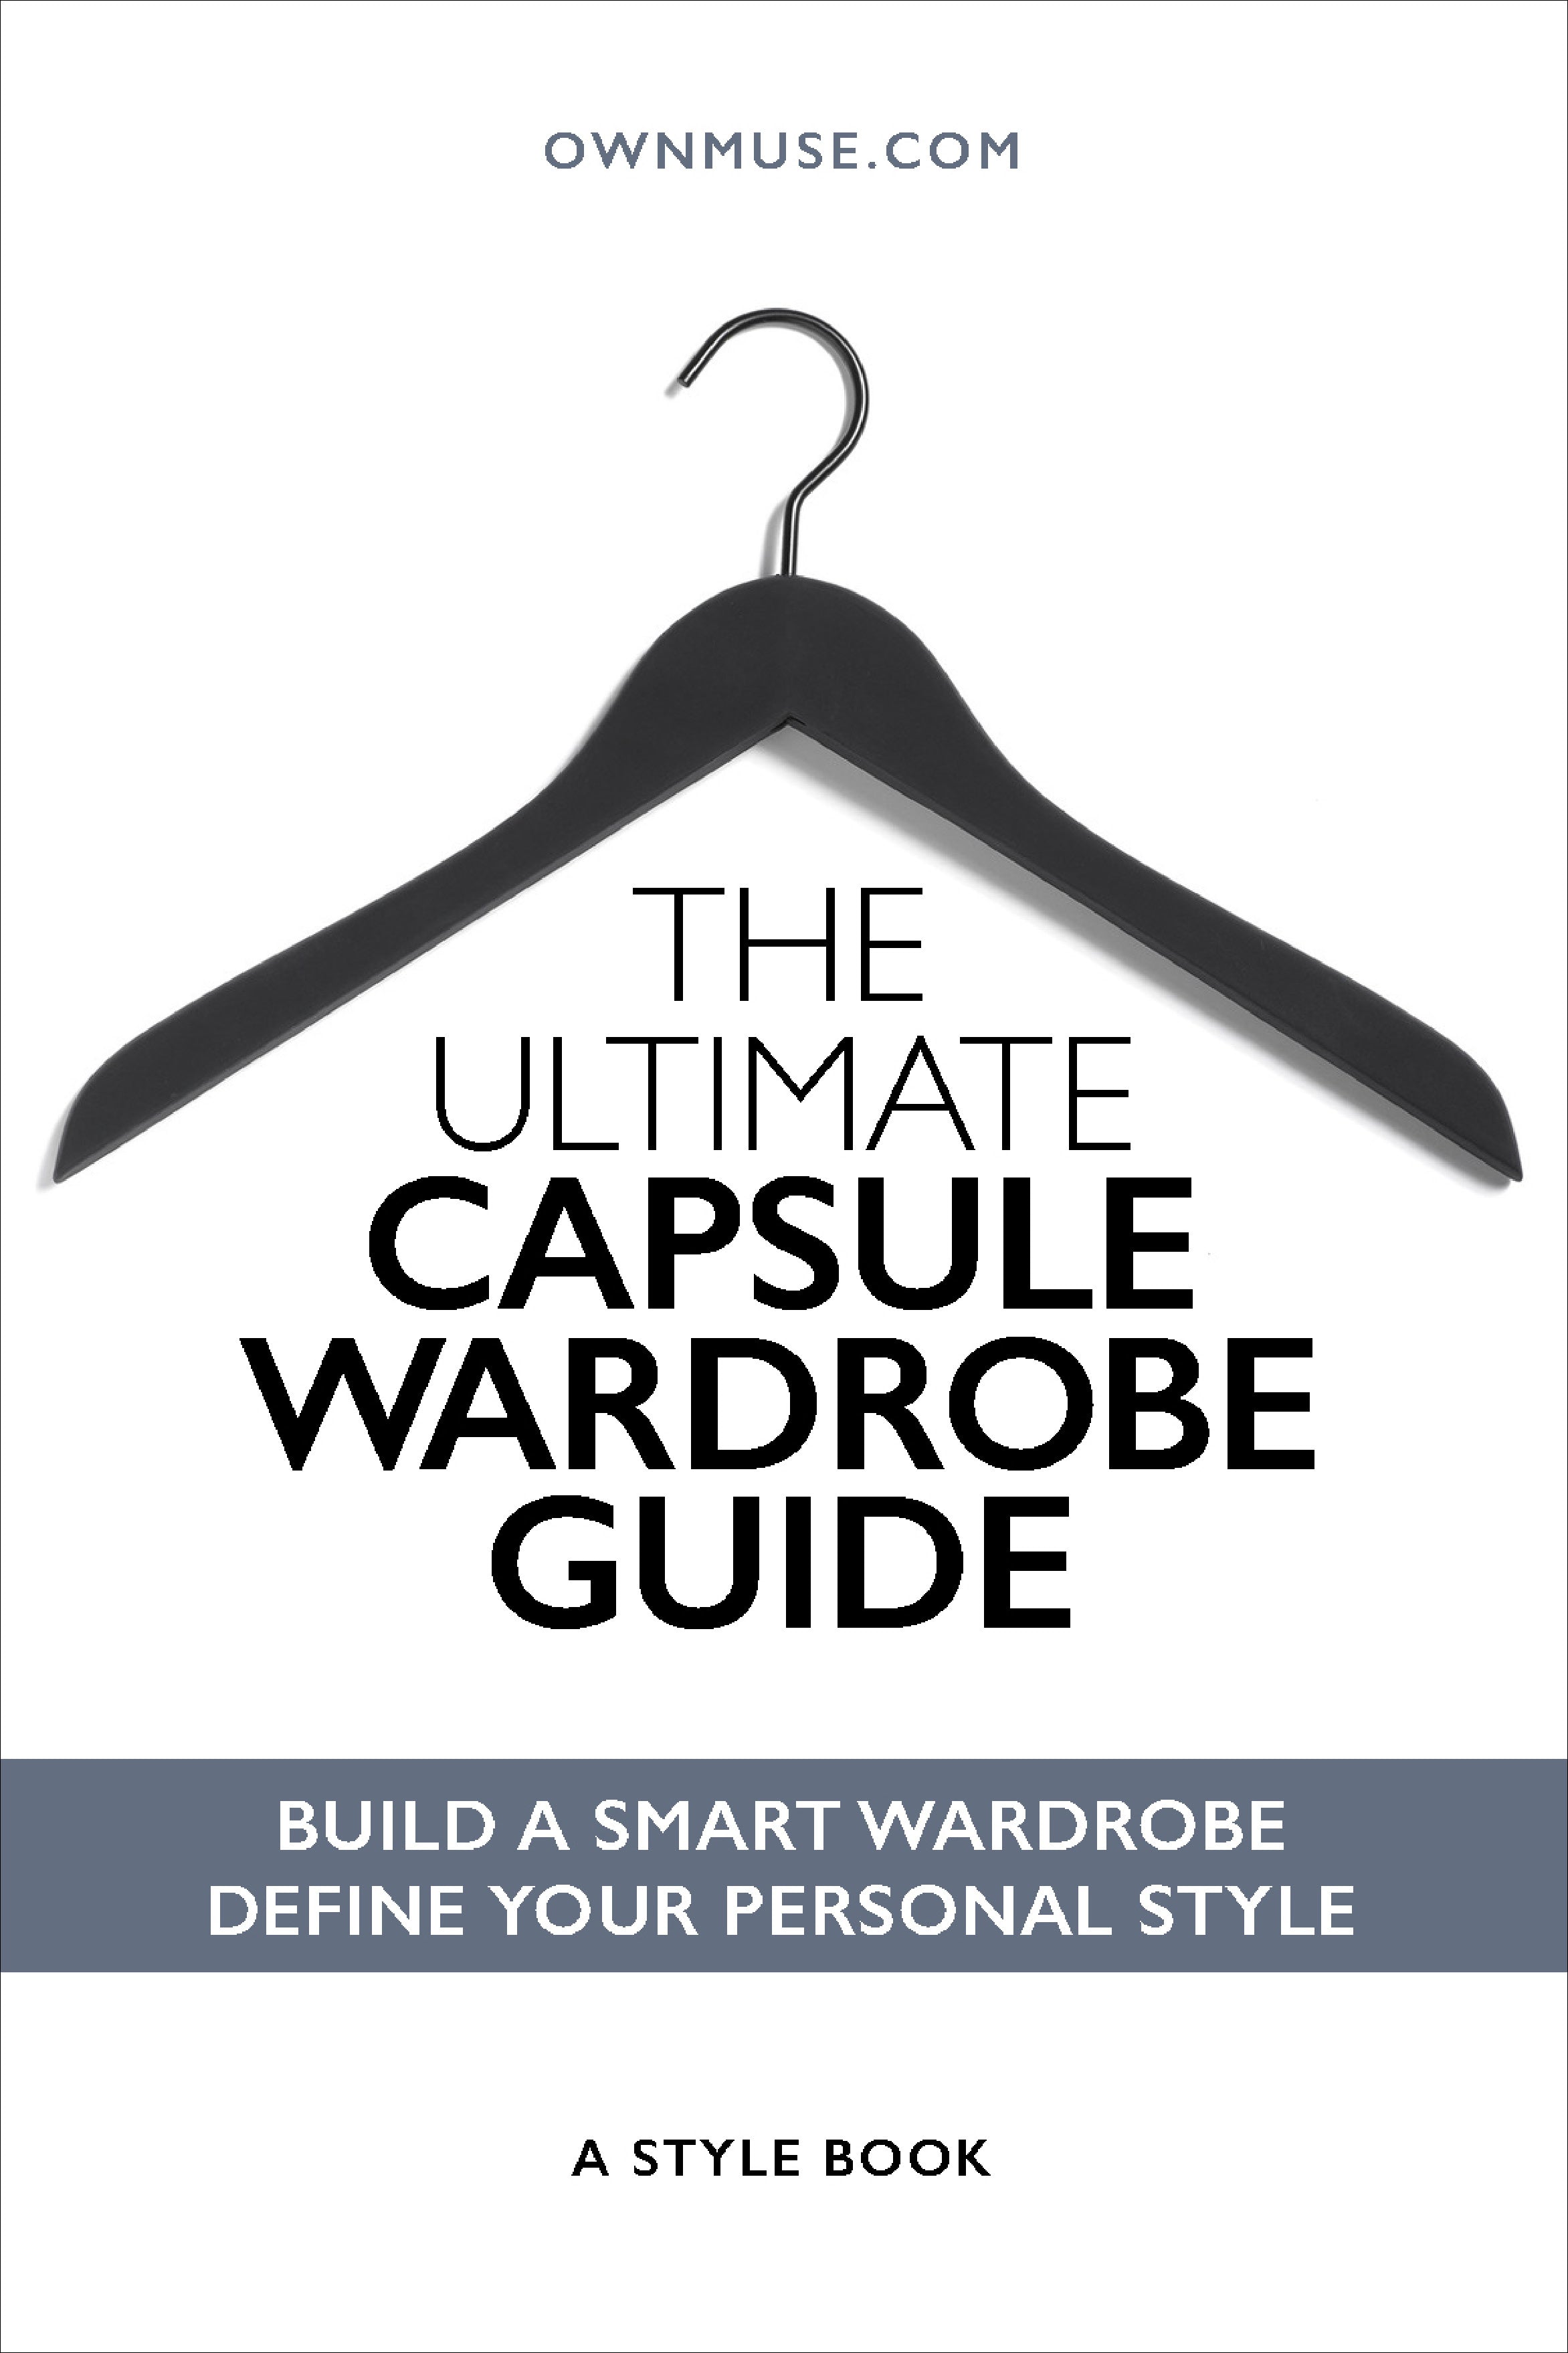 The Capsule Wardrobe Essentials Guide - Book and Workbook